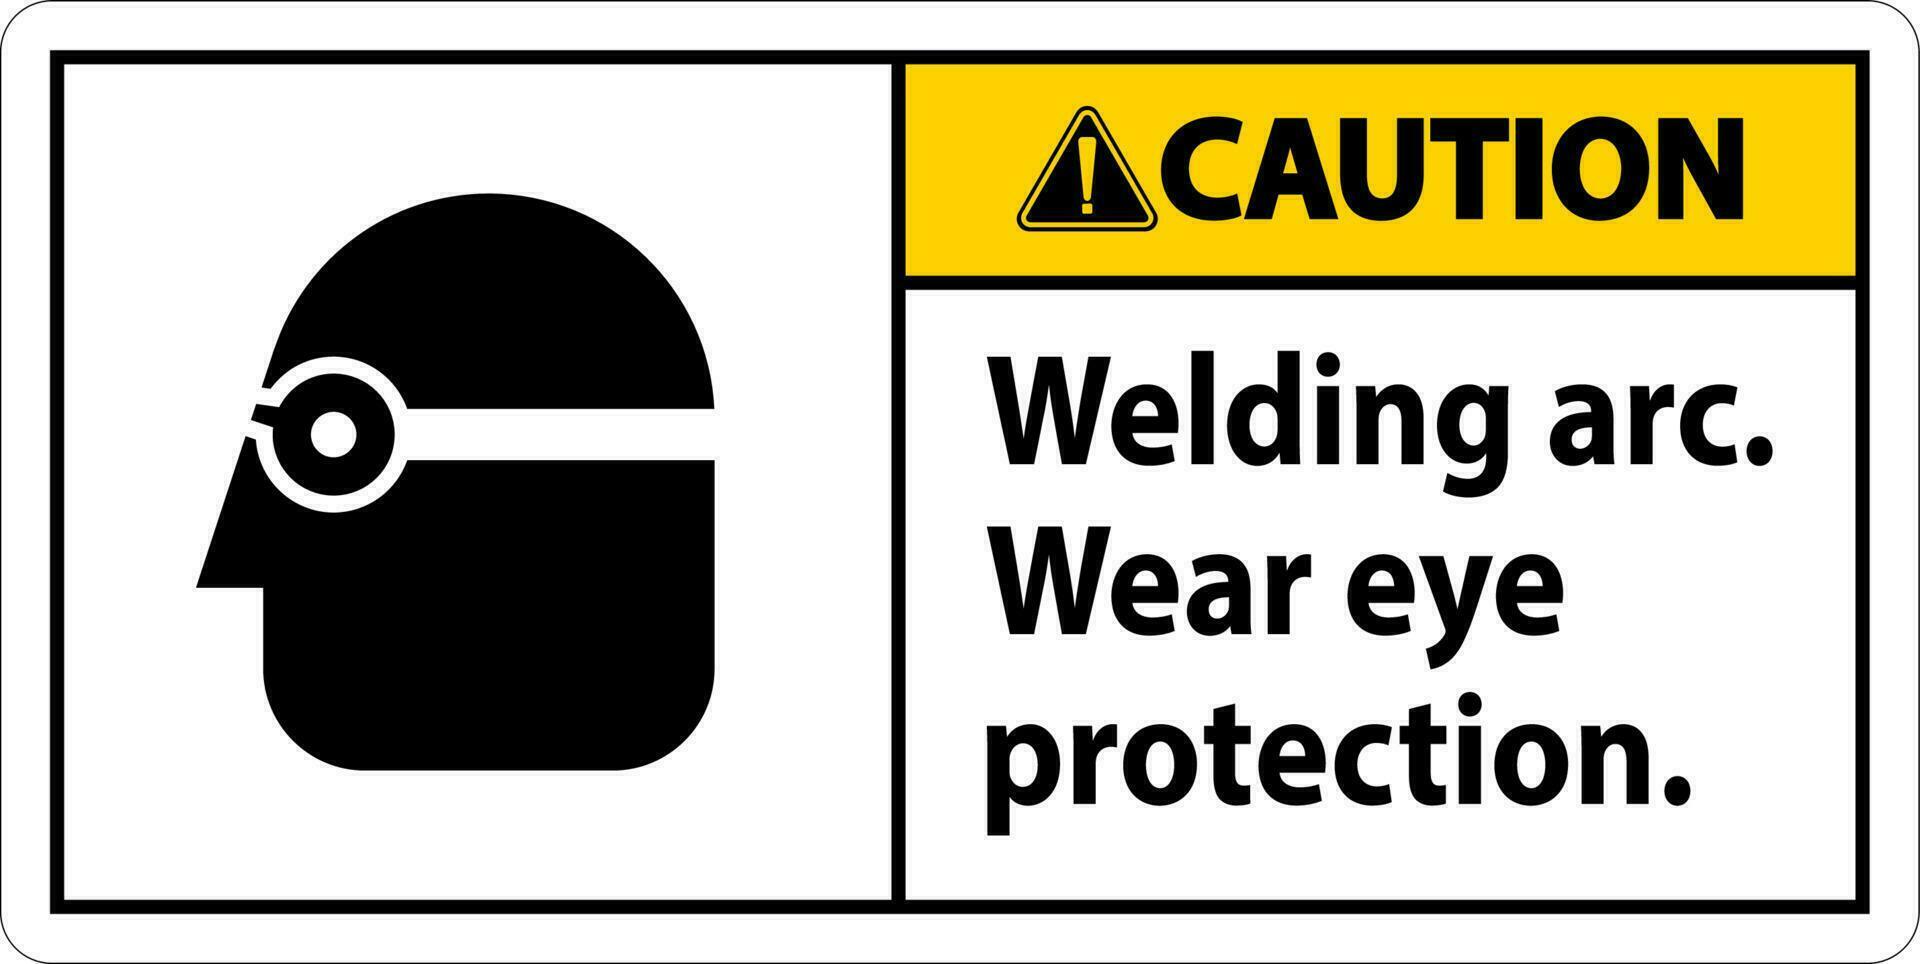 Caution Welding Arc Wear Eye Protection Sign vector